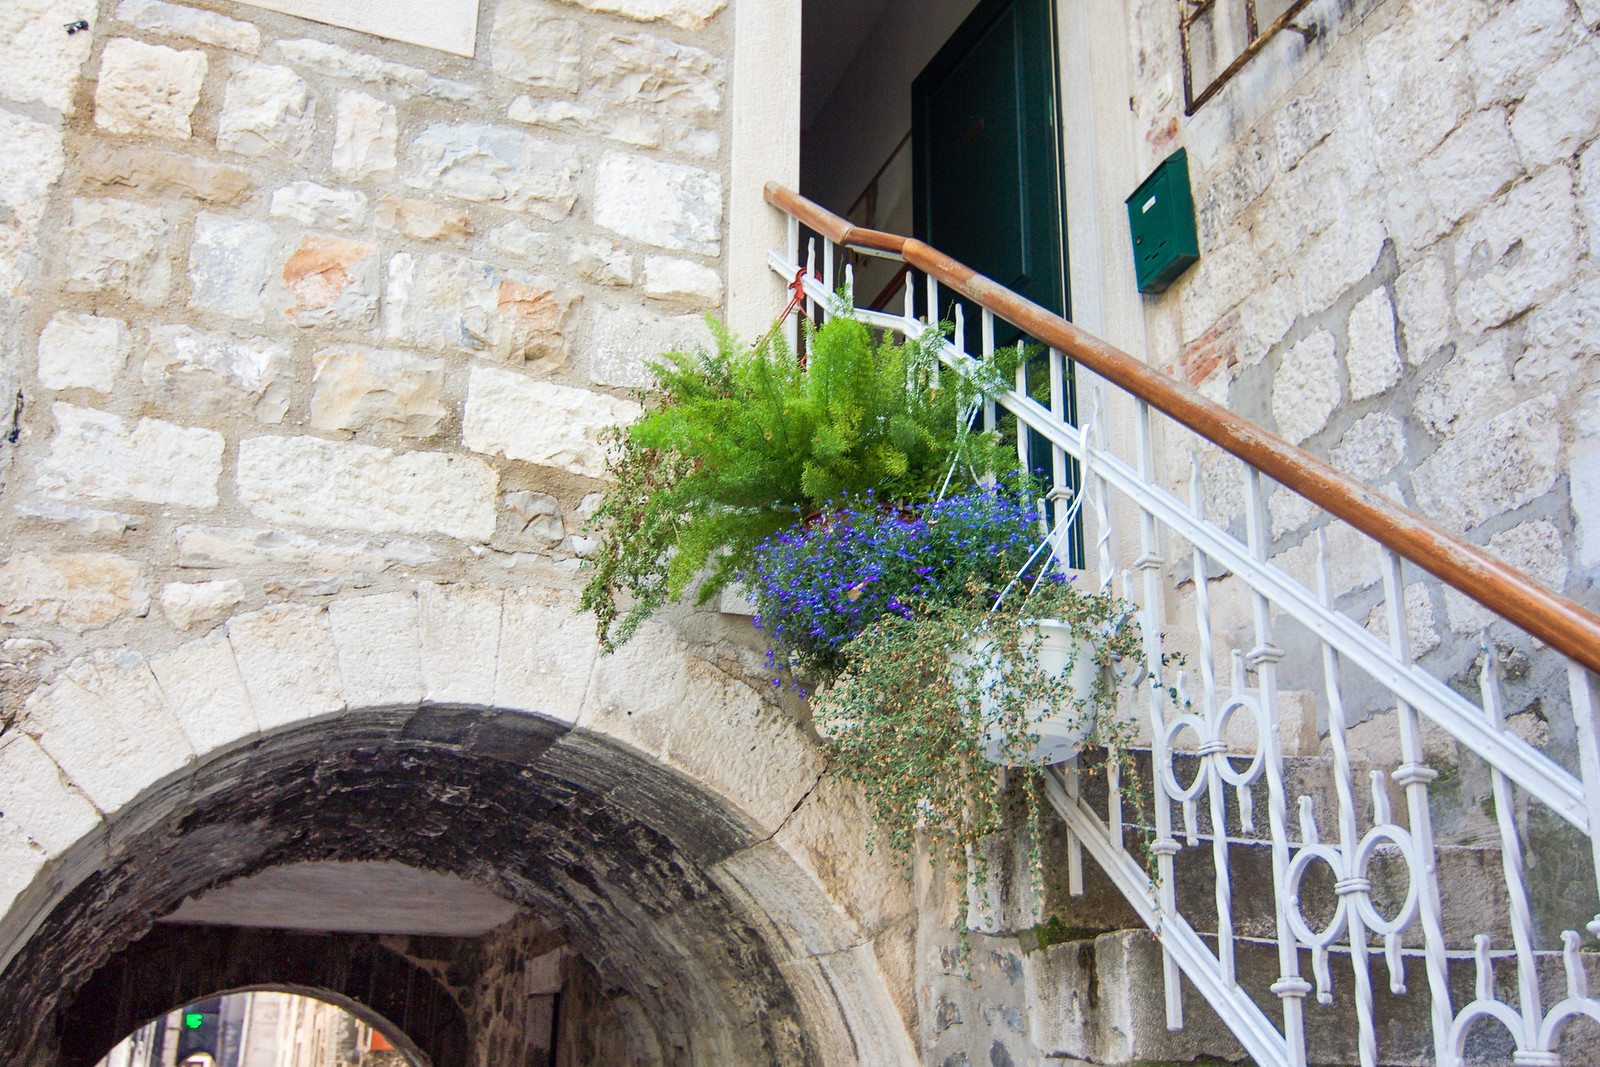 A Guide to Savoring Split, Croatia | Adelante